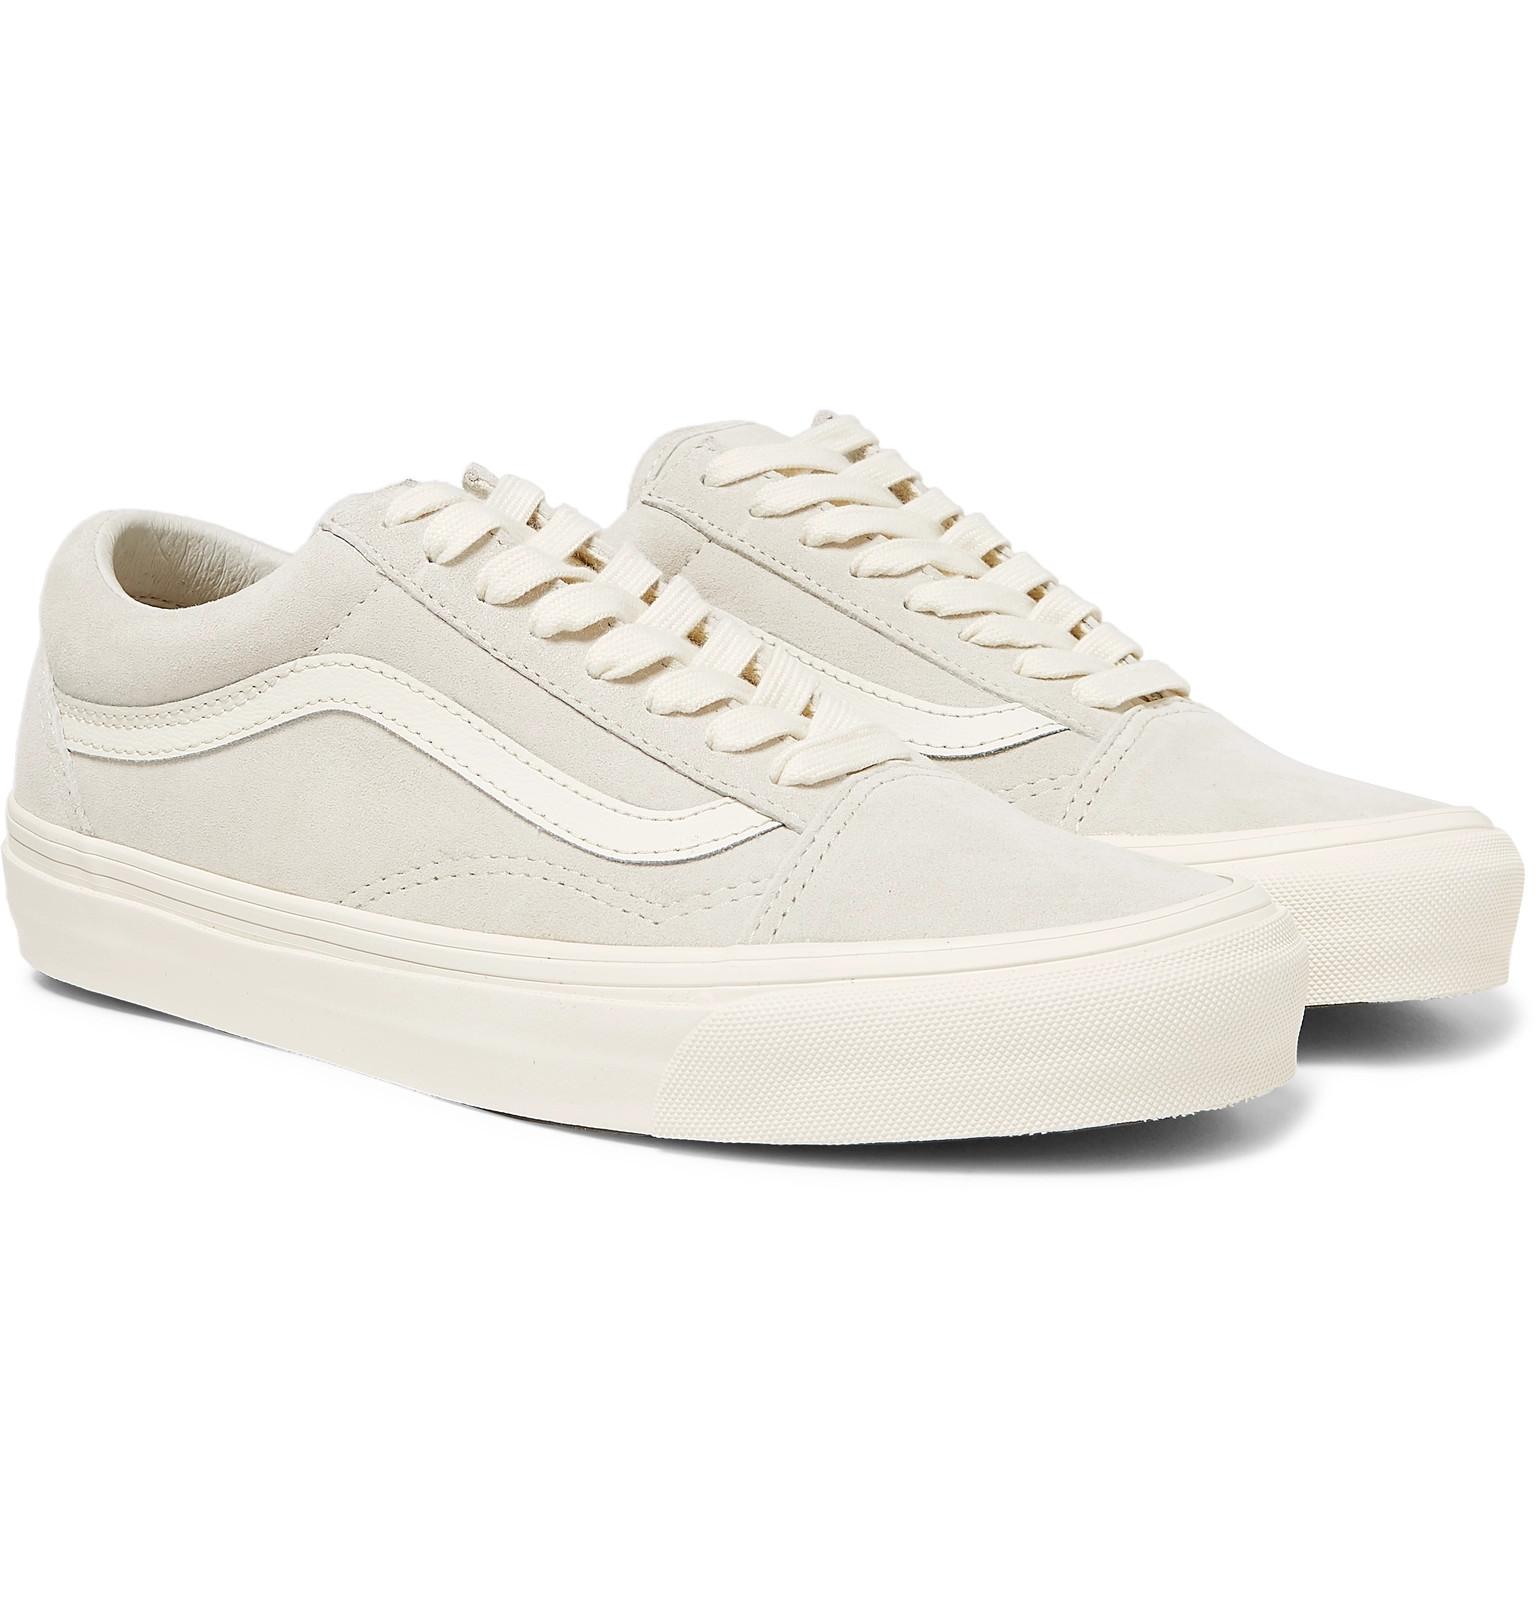 Vans Og Old Skool Lx Leather-trimmed Suede Sneakers in White for Men - Lyst